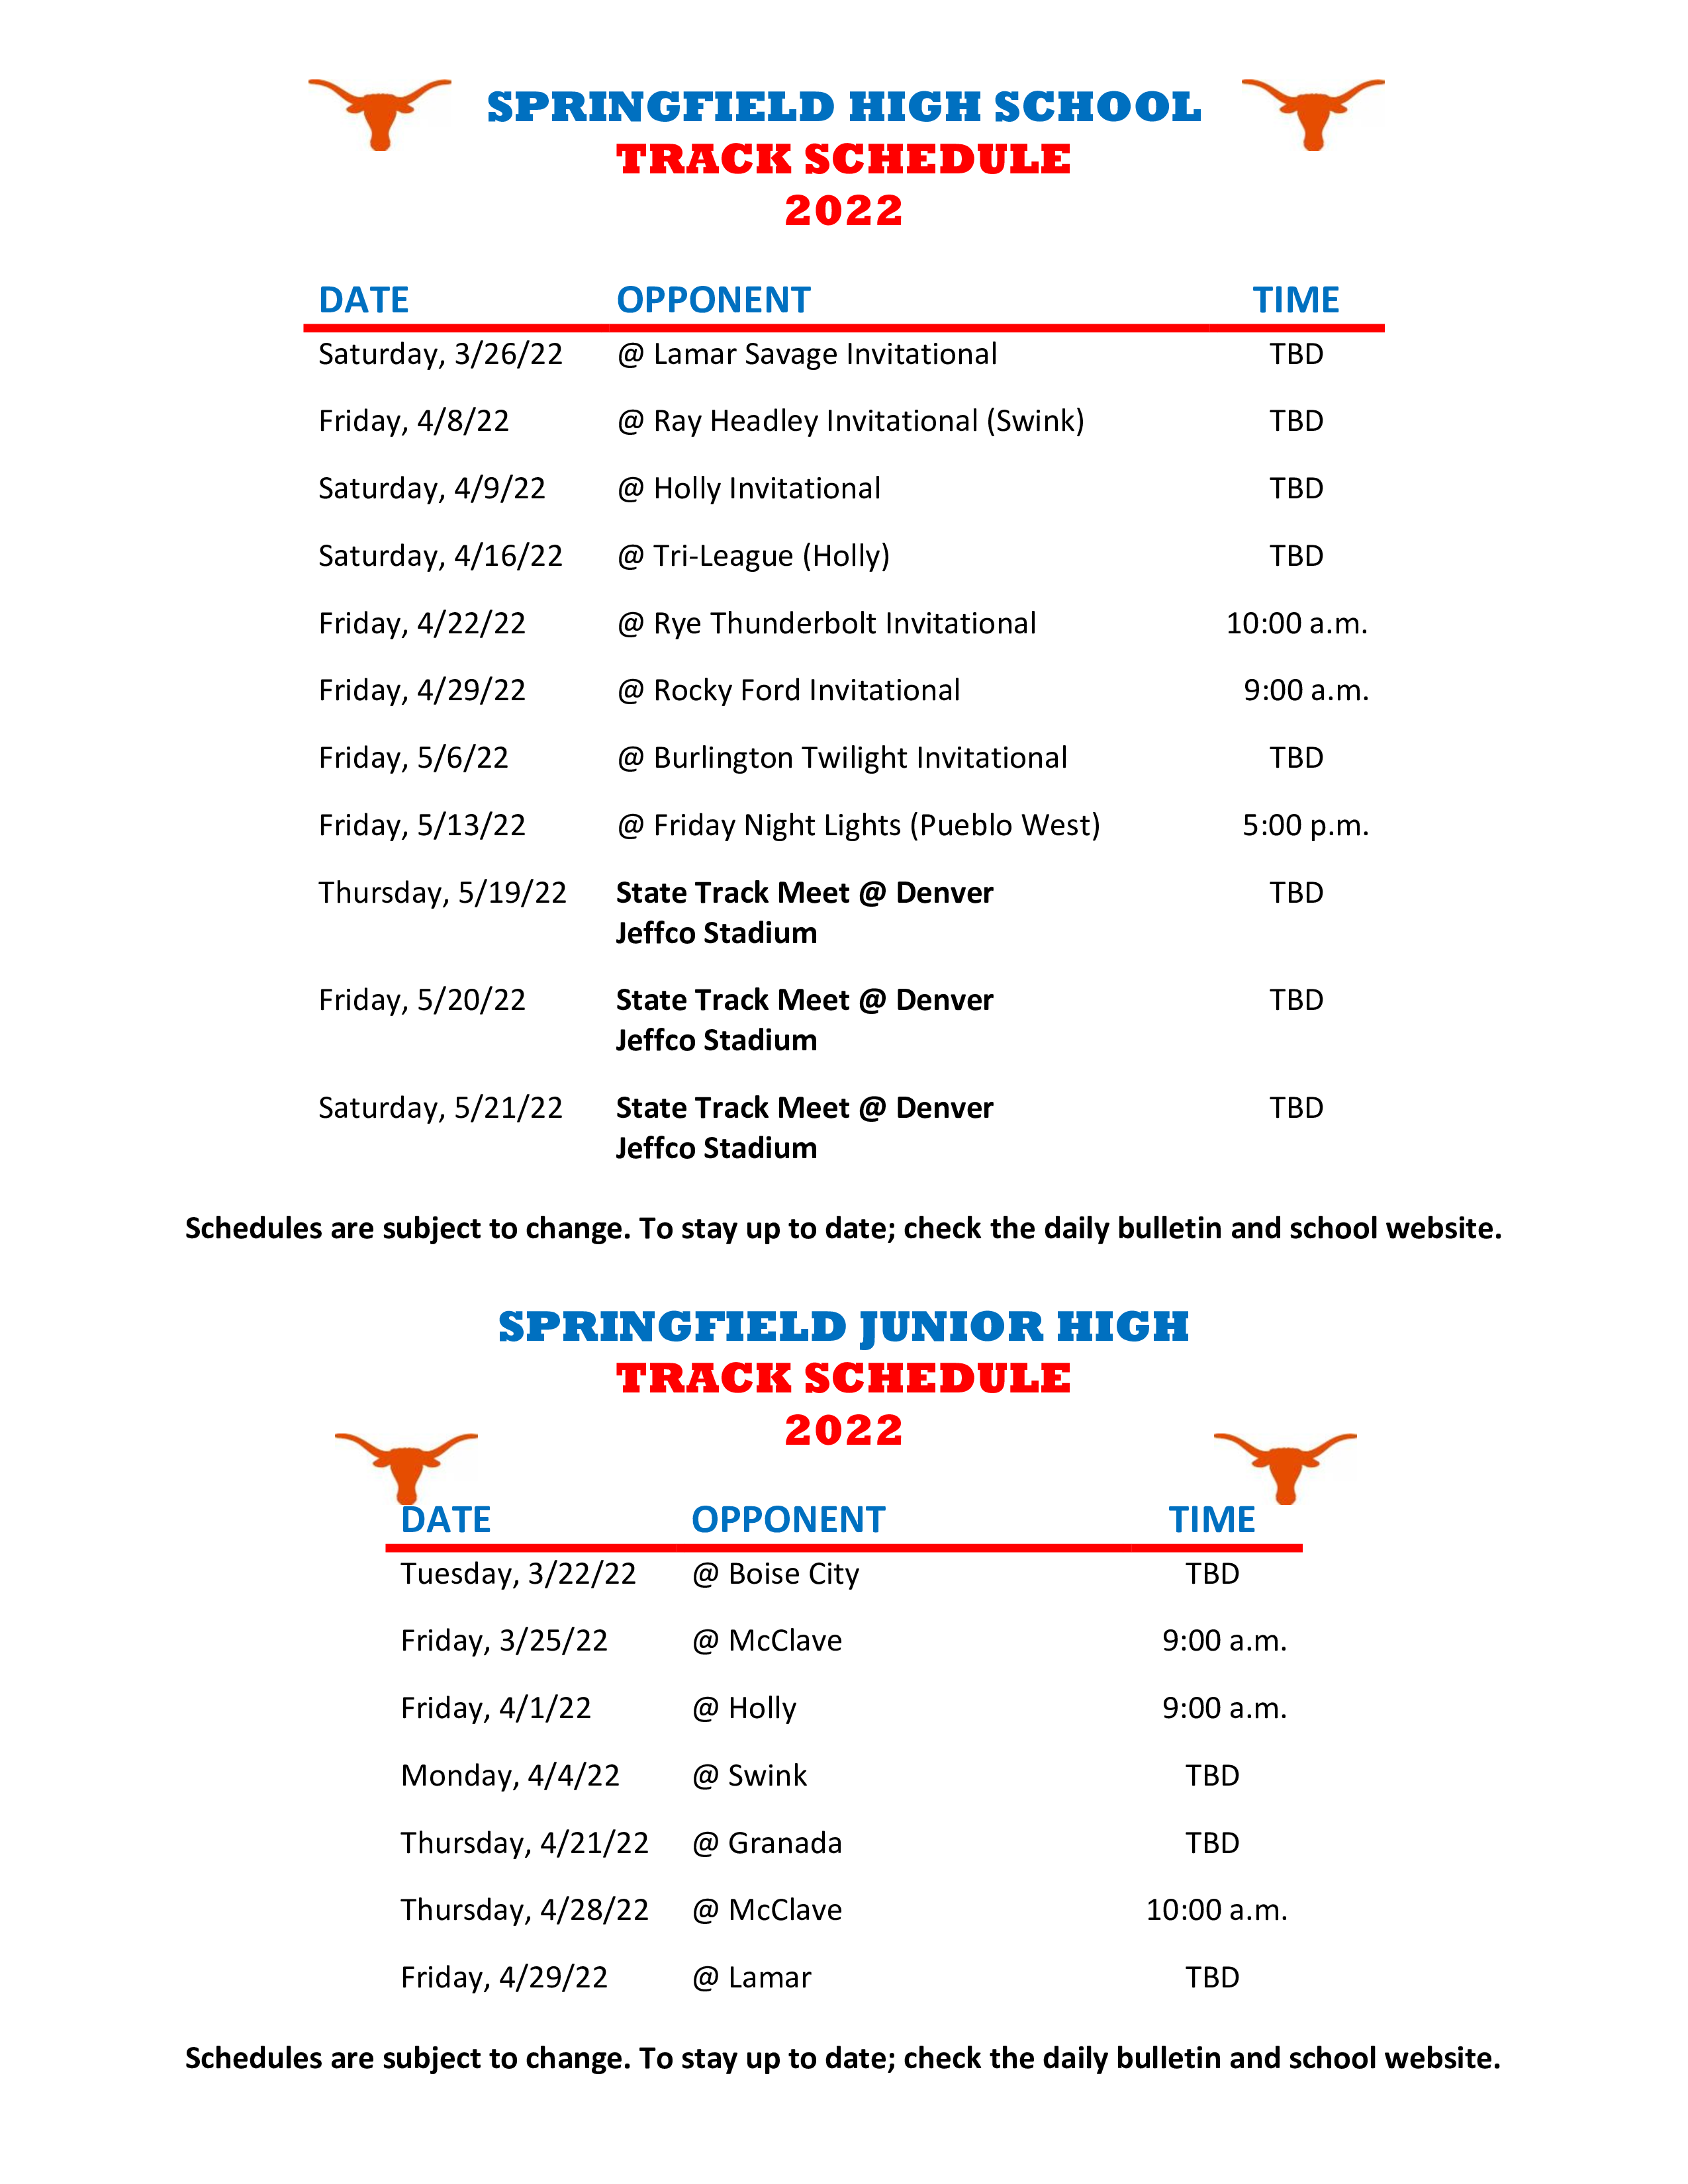 Junior and Senior High Track Schedule